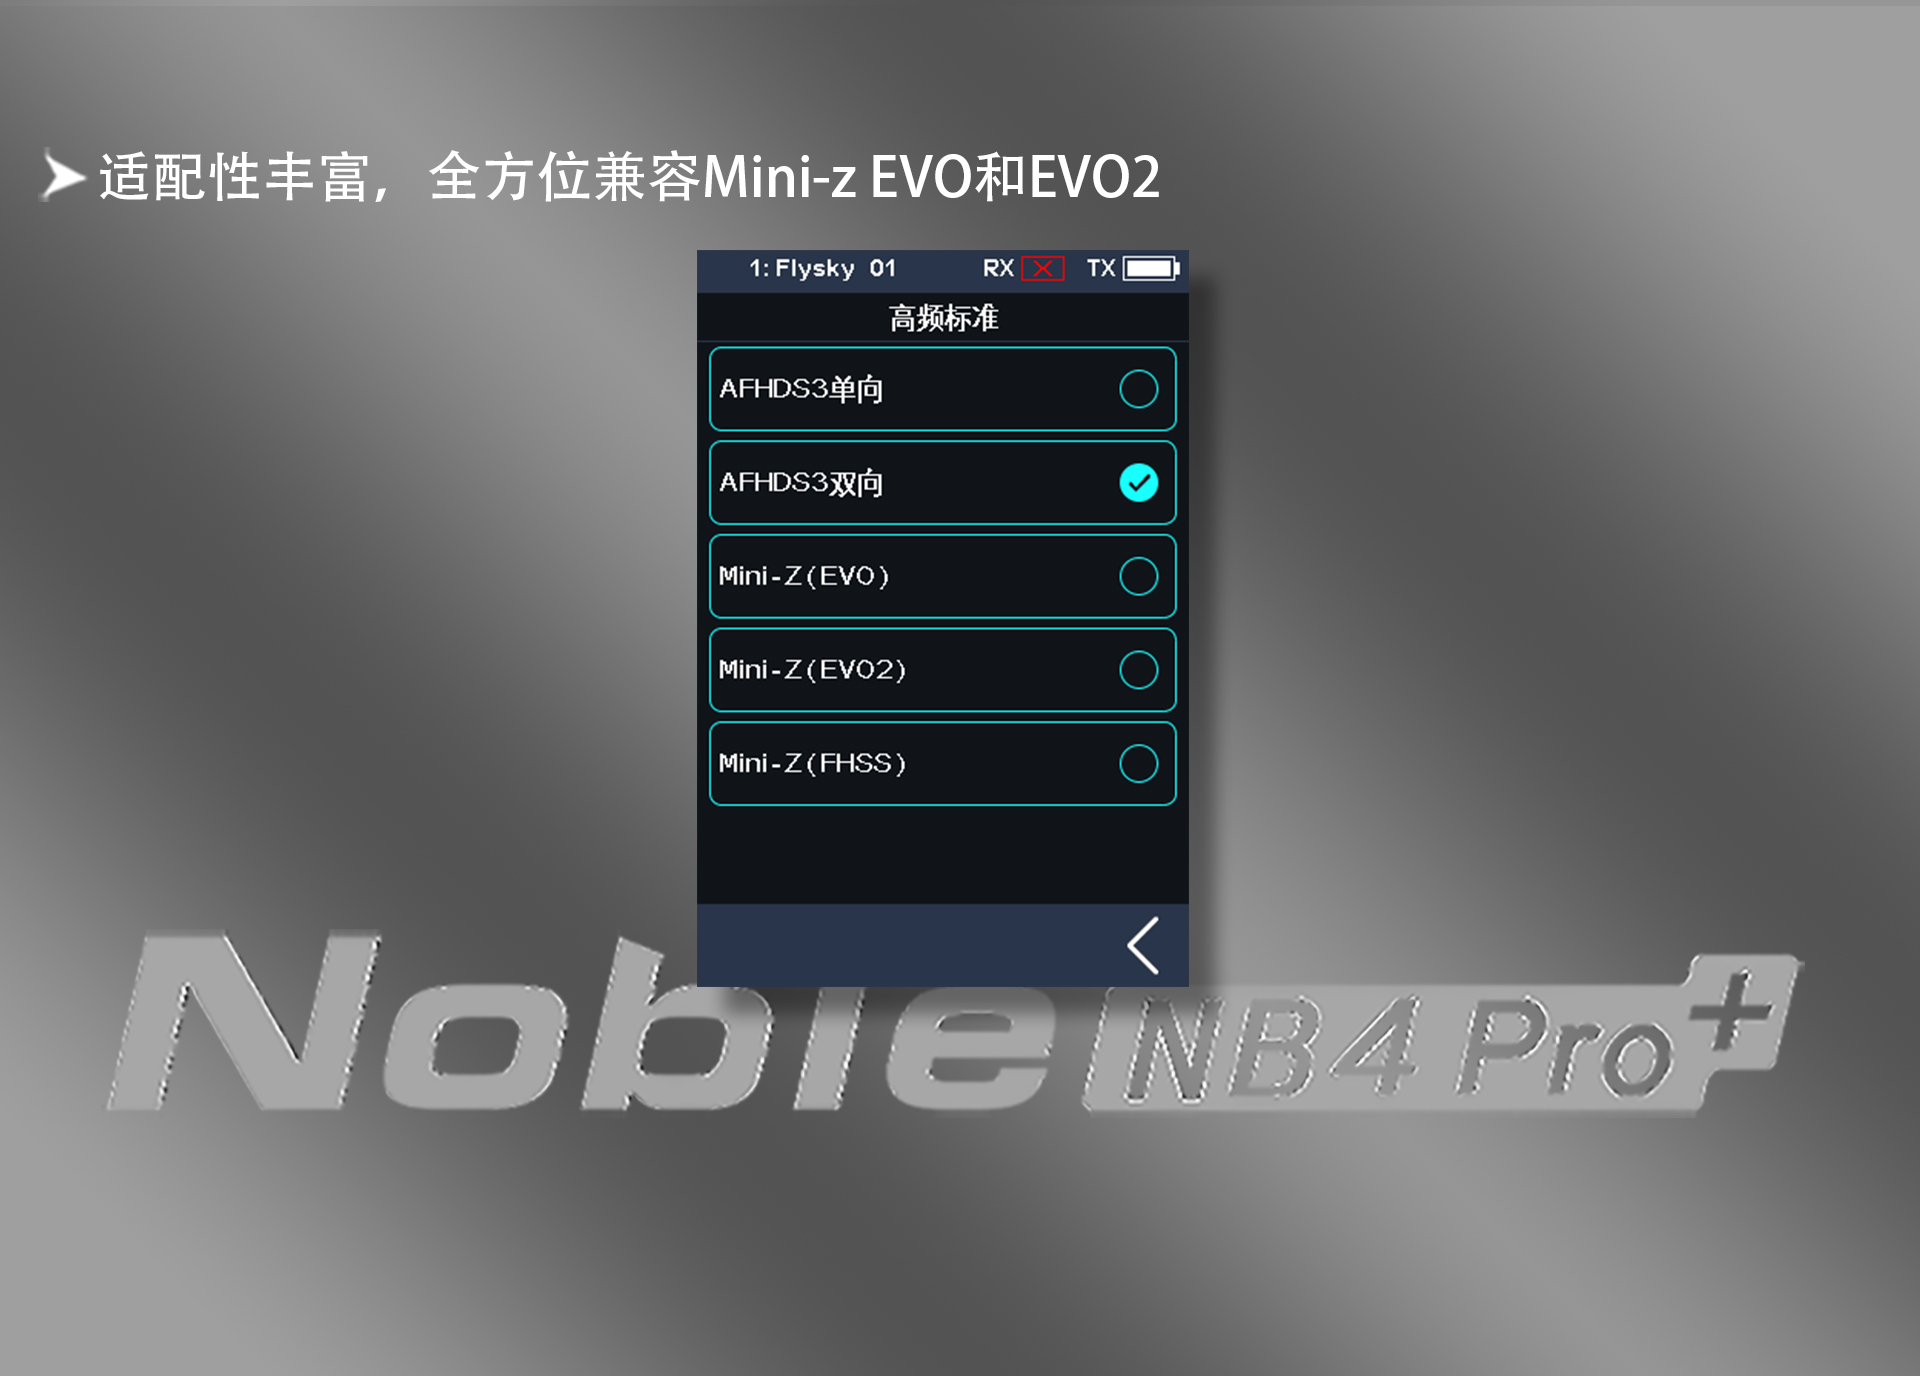 NB4 Pro+